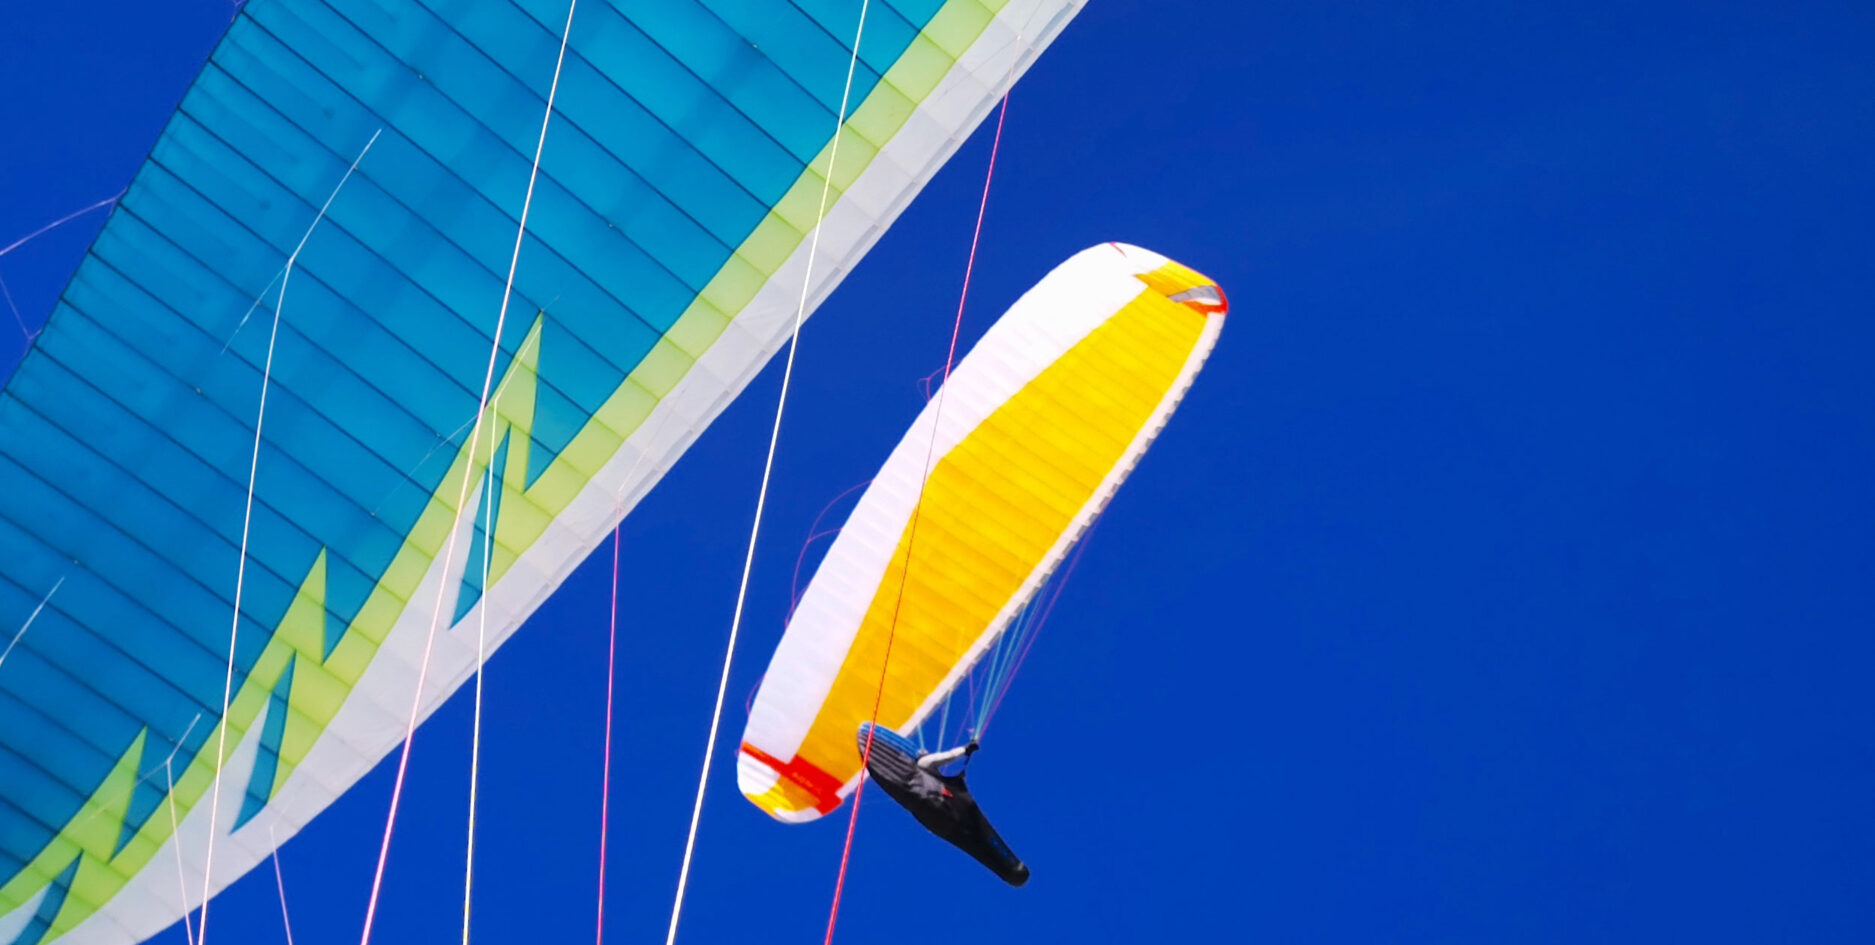 Nova Aonic paraglider